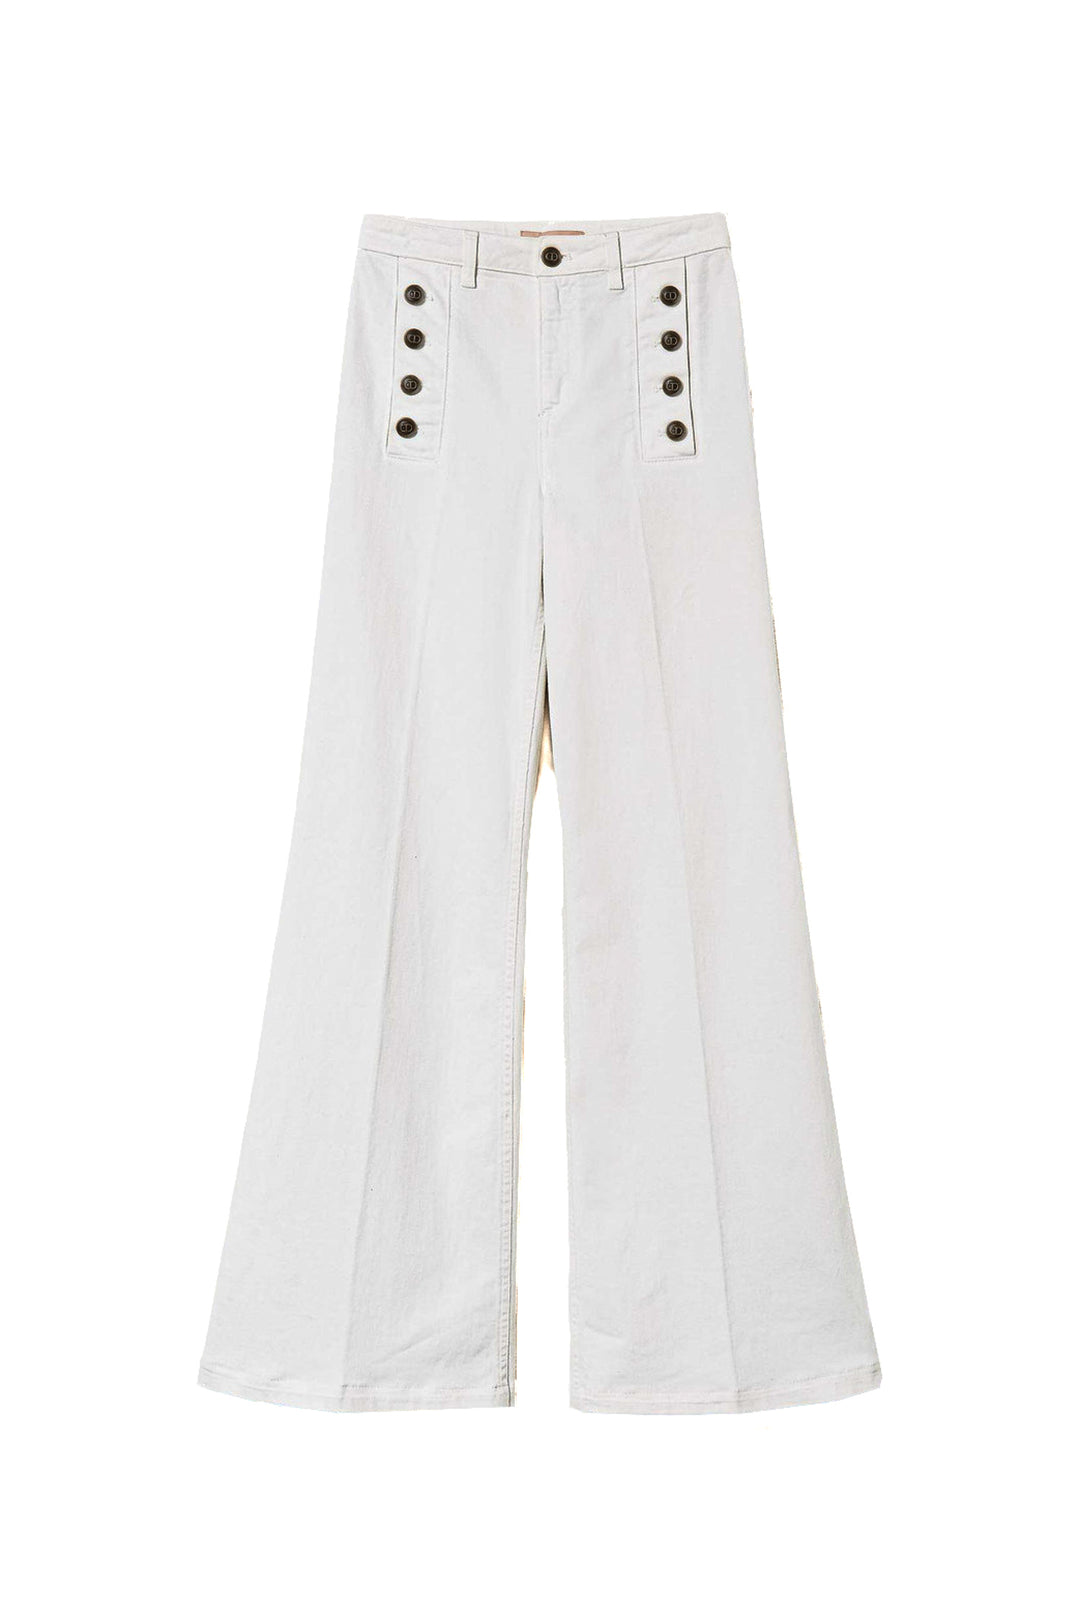 TWINSET Jeans flare bianco con bottoni décor - Mancinelli 1954